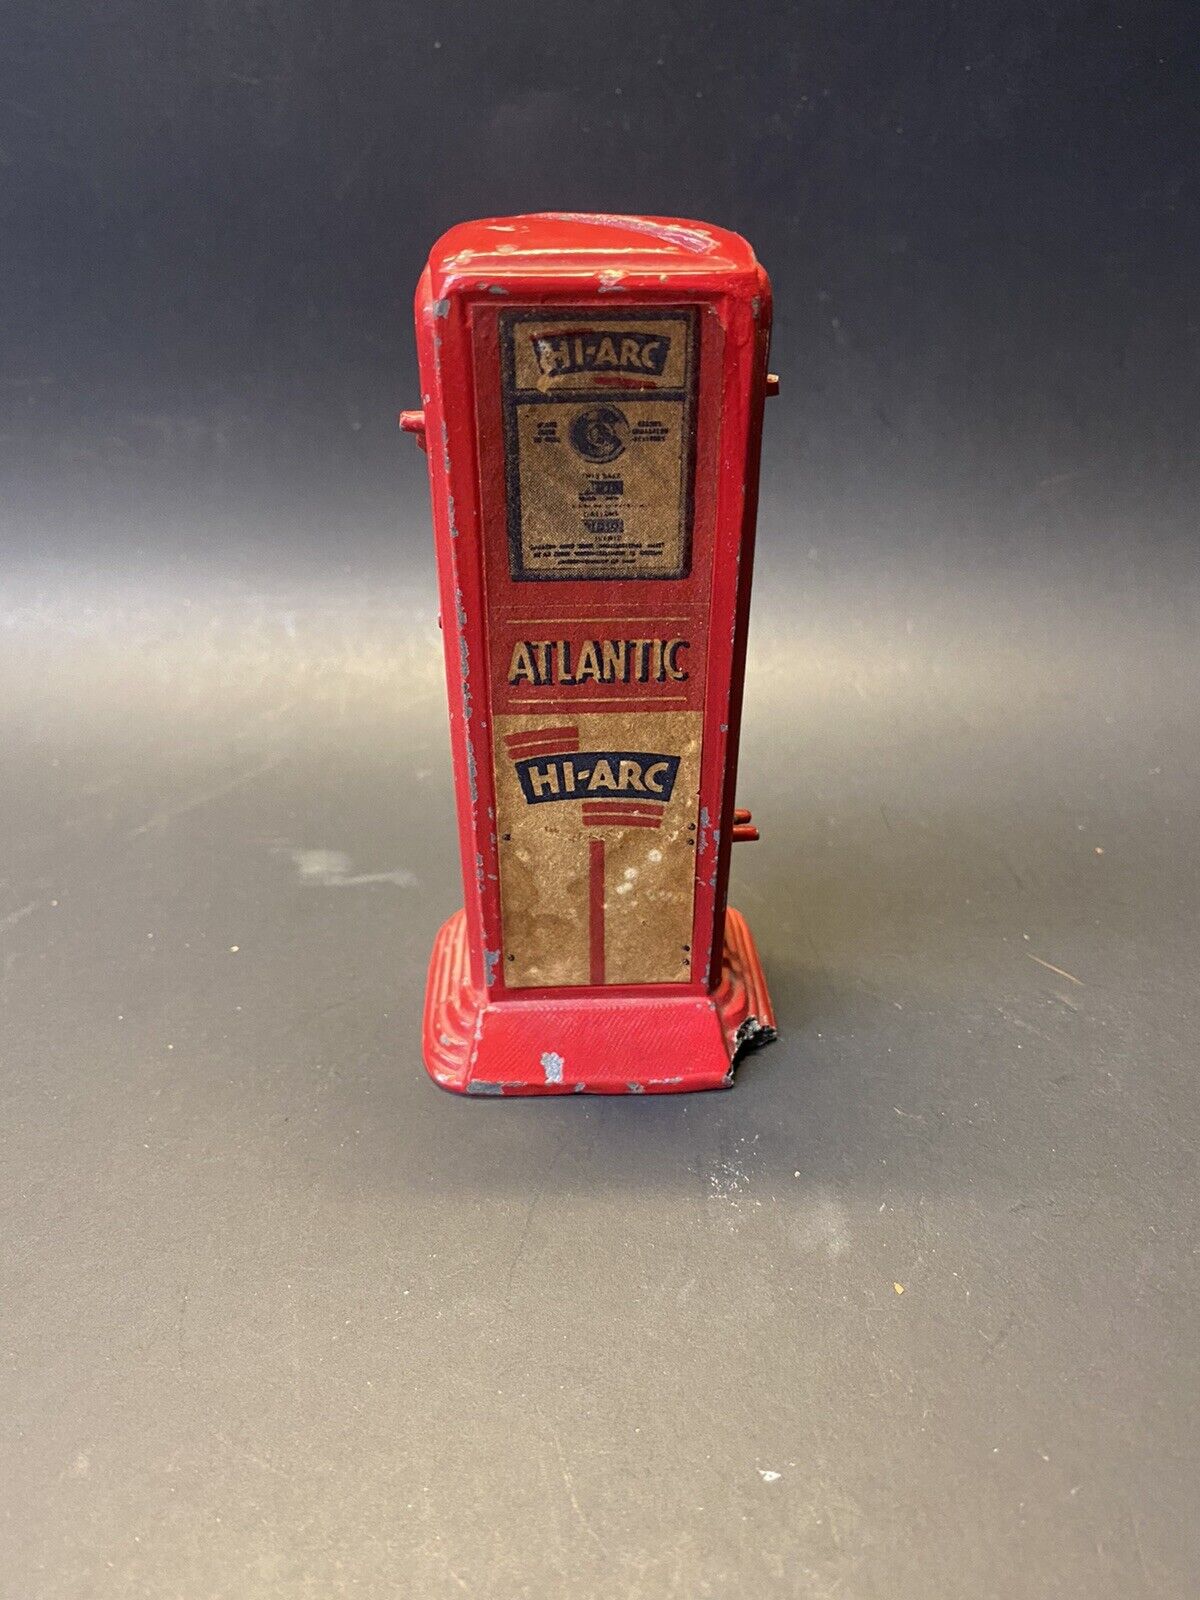 Vintage RARE Atlantic HI-ARC Gasoline Red Advertising Promotional Coin Bank